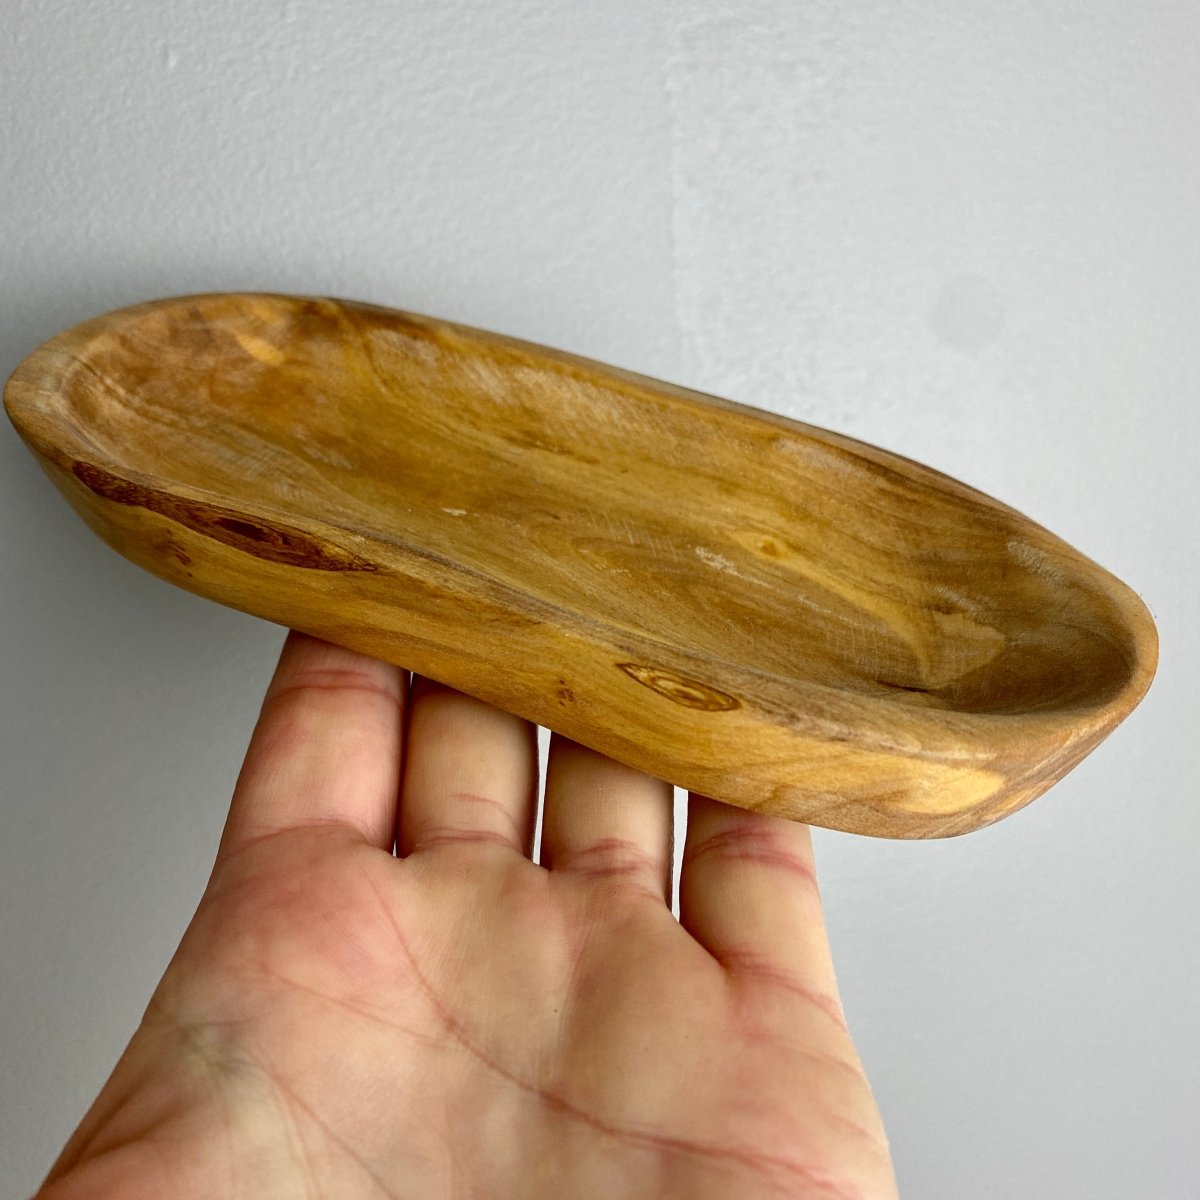 Olive Wood Bowl 6.75 x 2.88 inch - DaRosa Creations